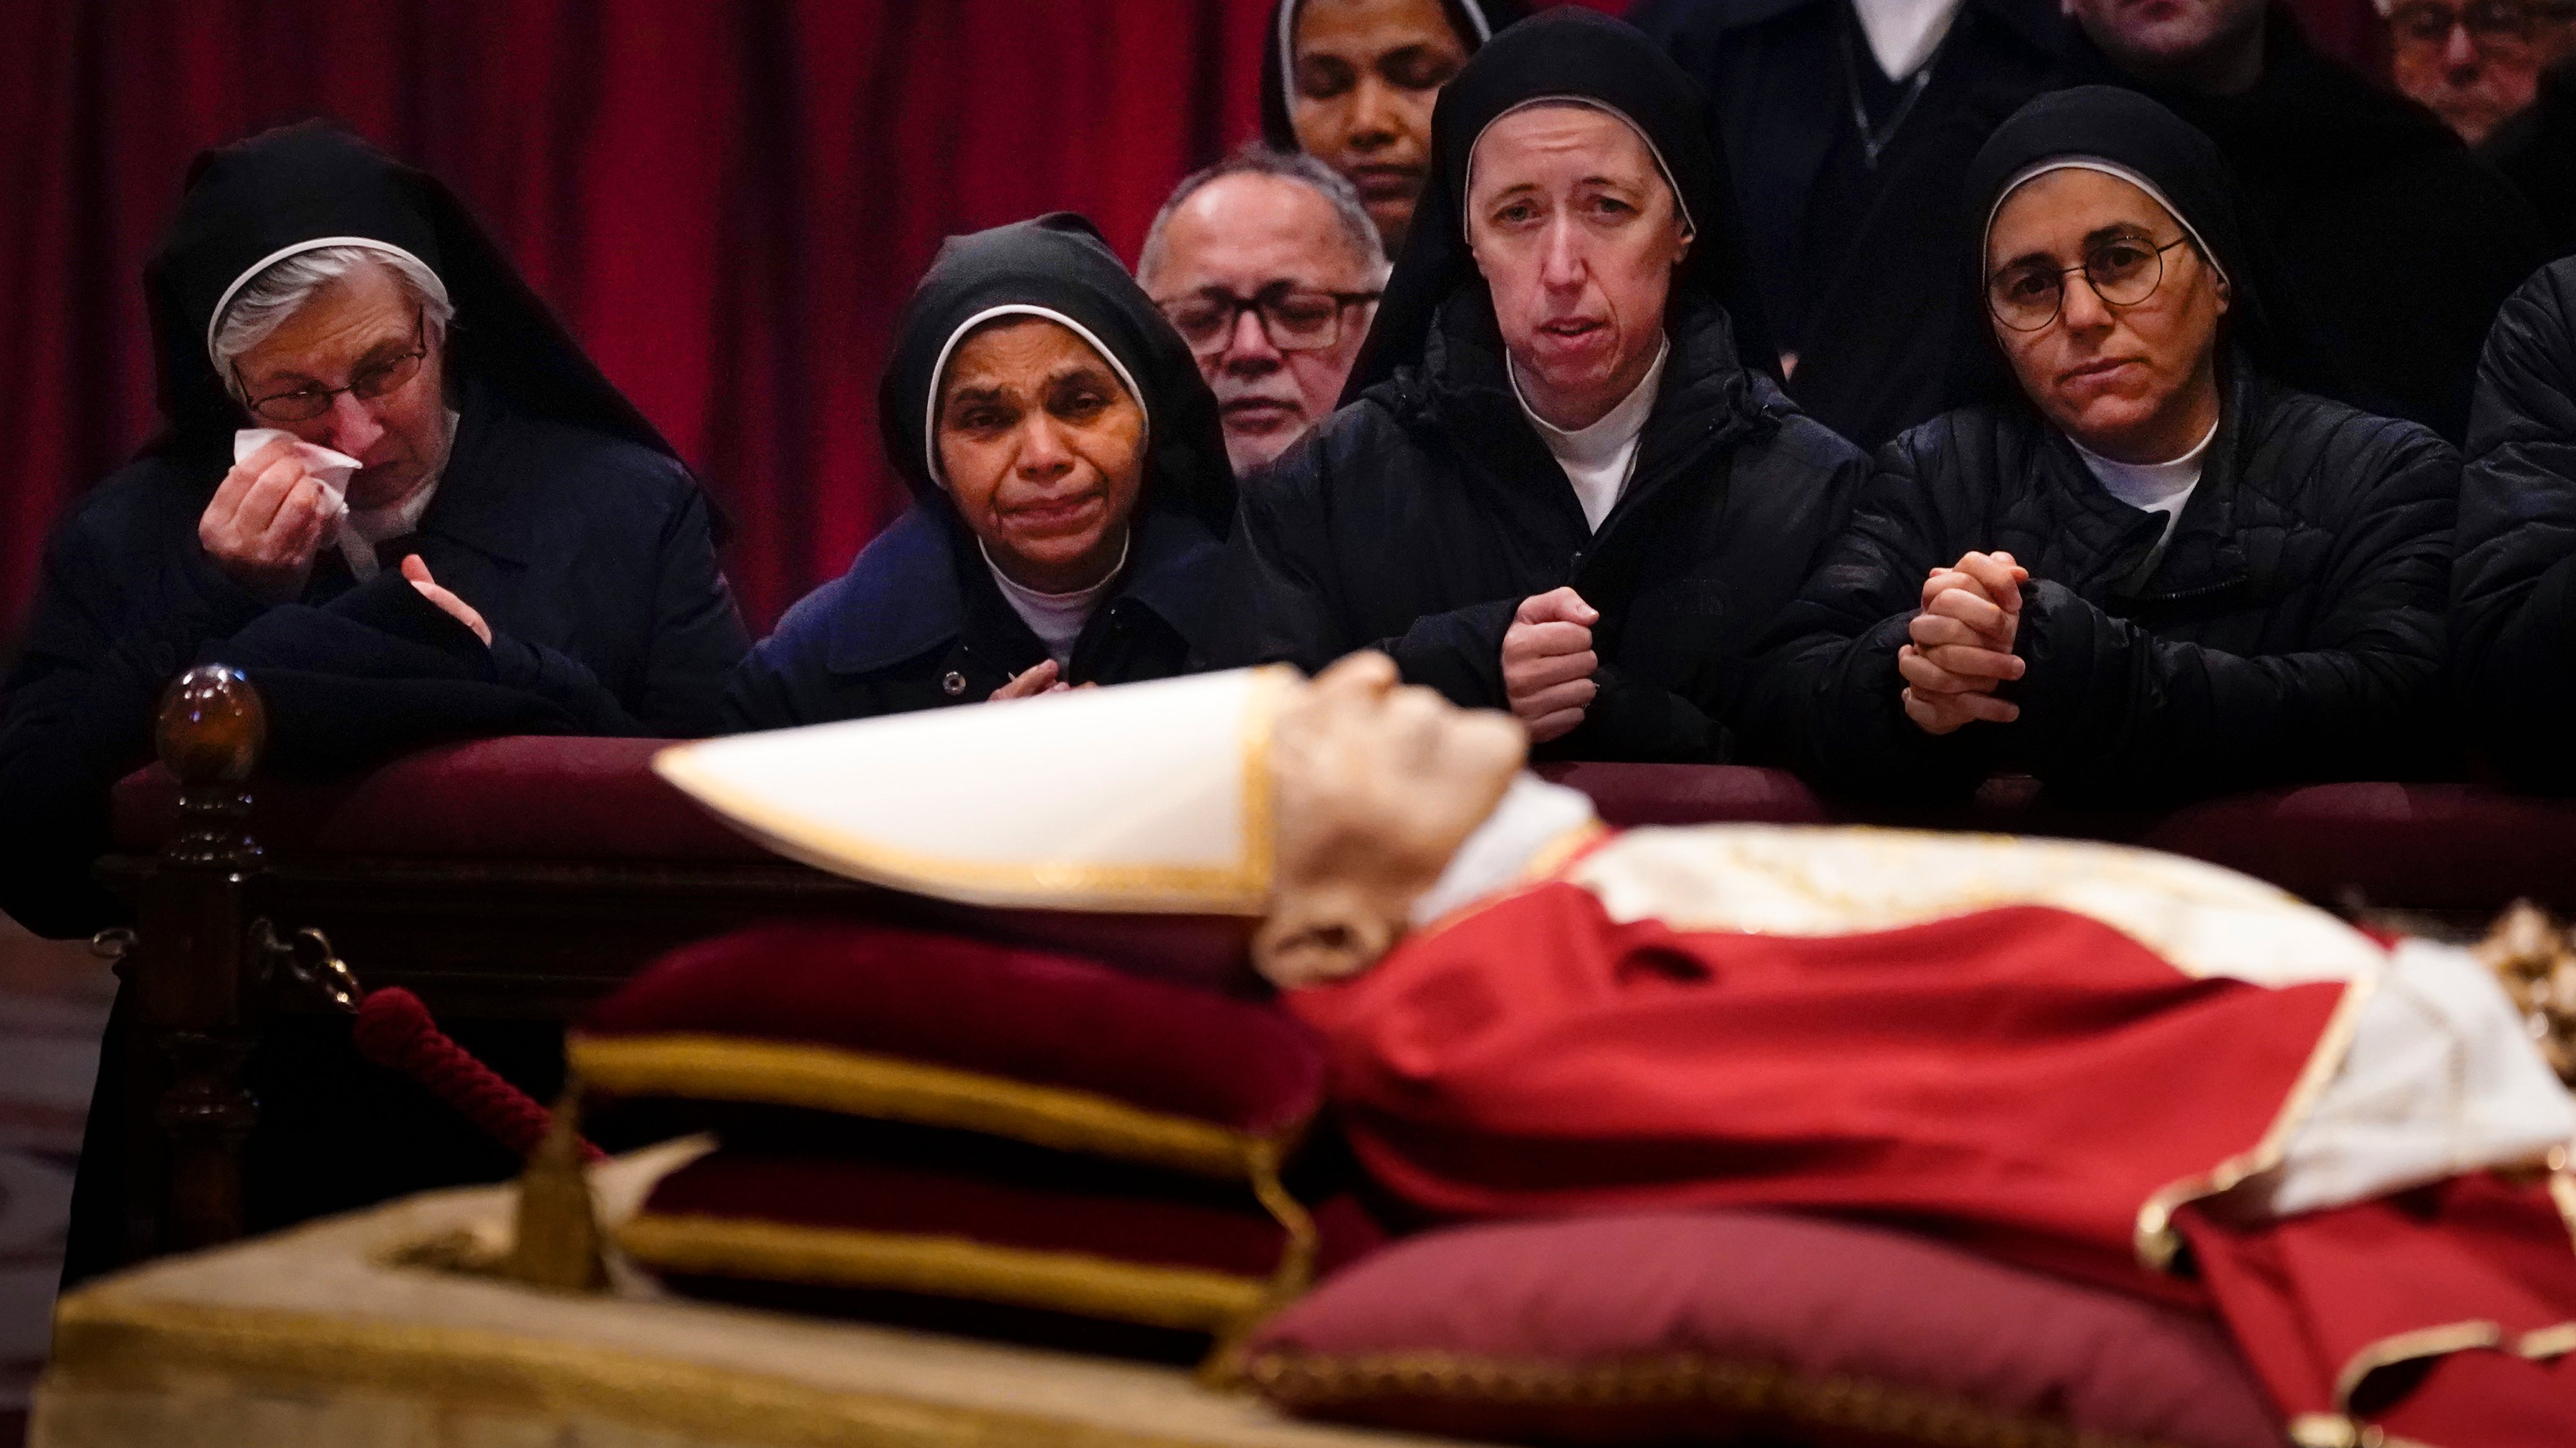 Catholics In Italy Mourn The Death Of Pope Emeritus Benedict XVI - Tuesday